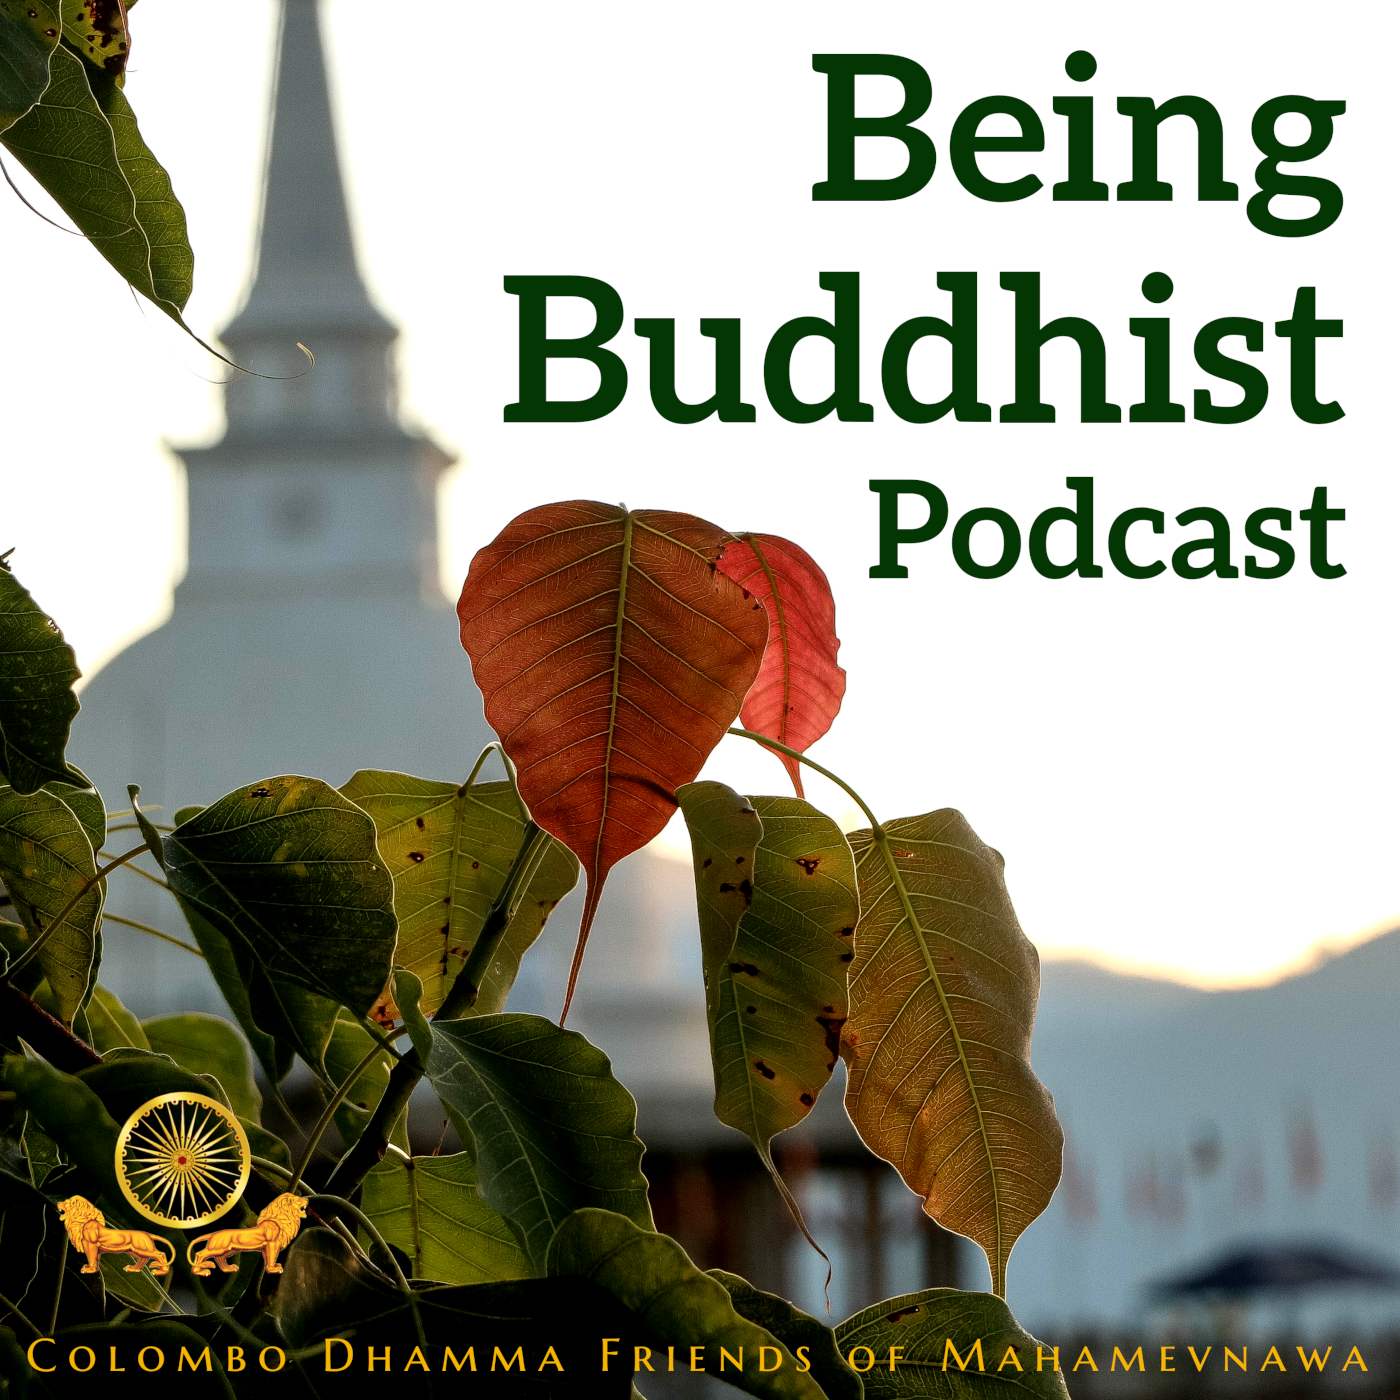 Being Buddhist Podcast